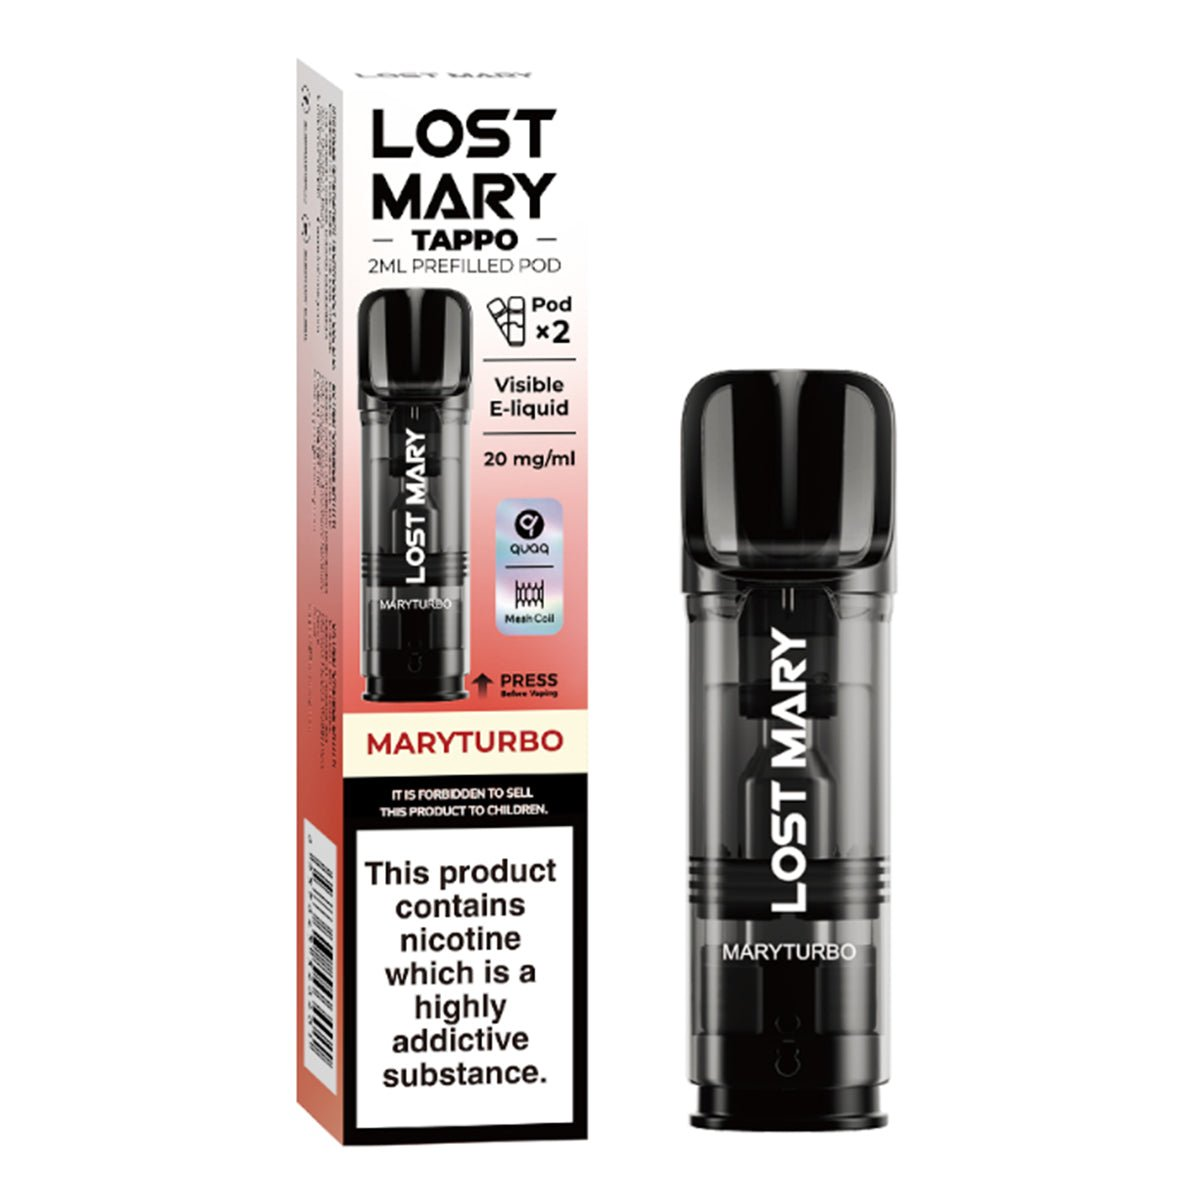 Mary Turbo Tappo Pre-filled Pod by Lost Mary - Manabush Eliquid - Tobacco E-liquid and Vape Juice